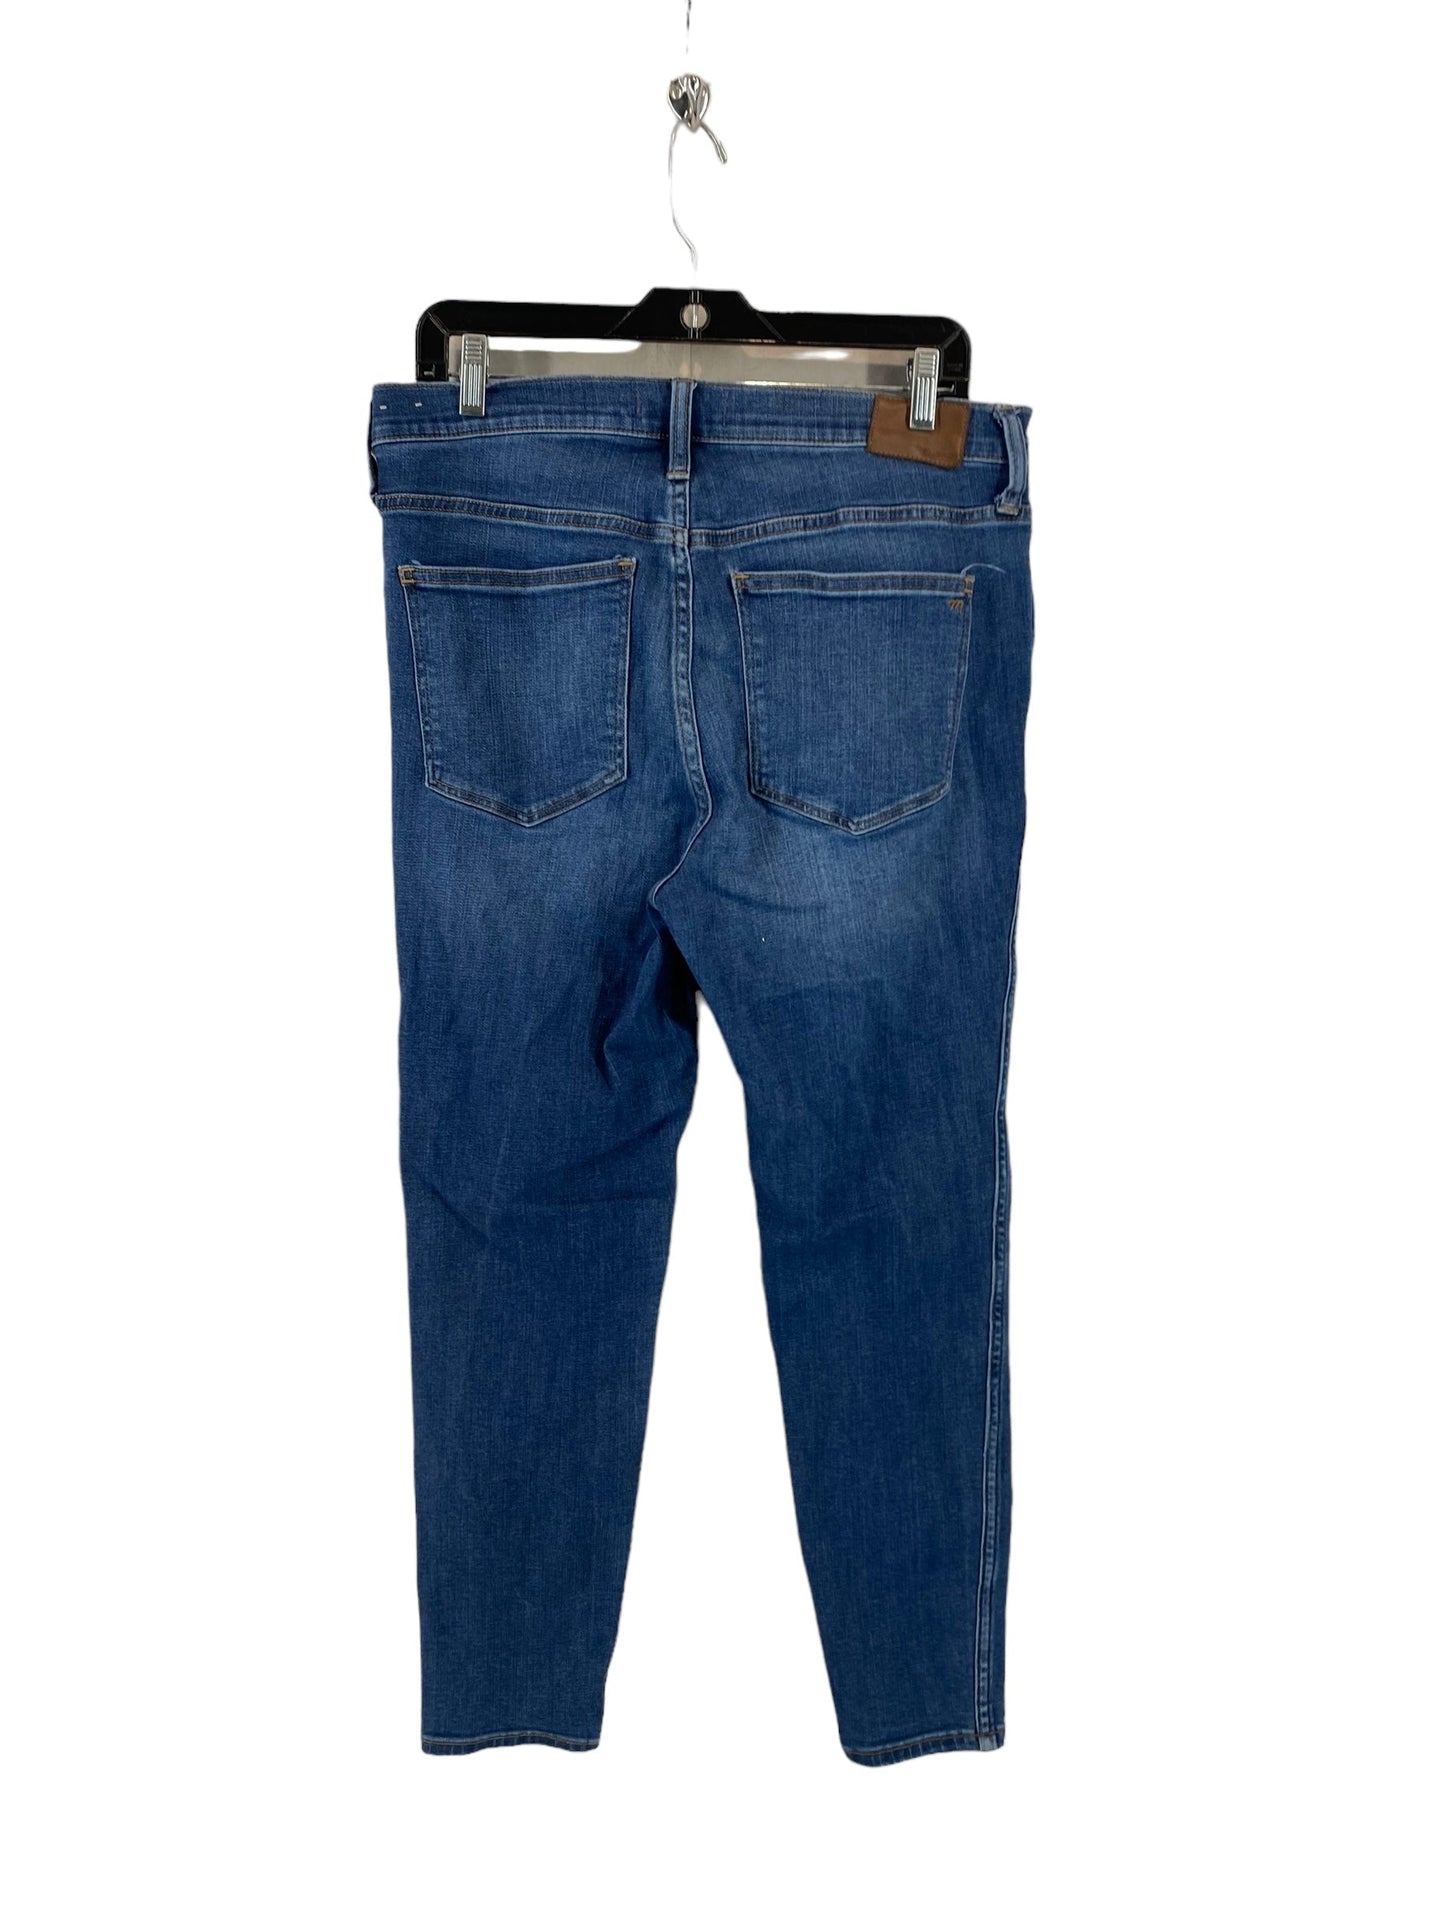 Blue Denim Jeans Skinny Madewell, Size 31